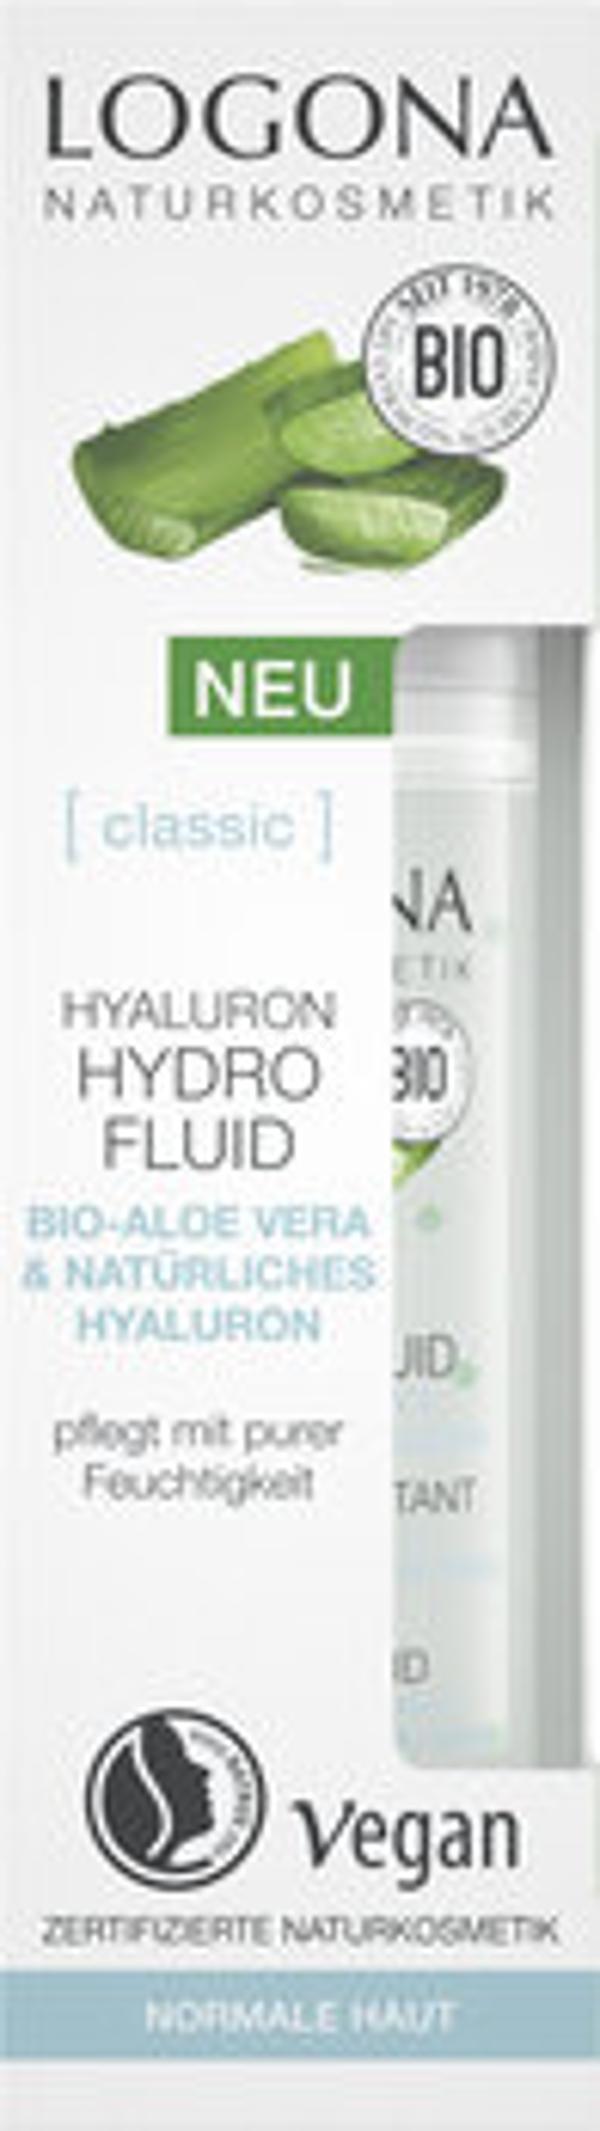 Produktfoto zu CLASSIC Hyaluron Hydro Fluid Aloe Vera & Hyaluron 30ml